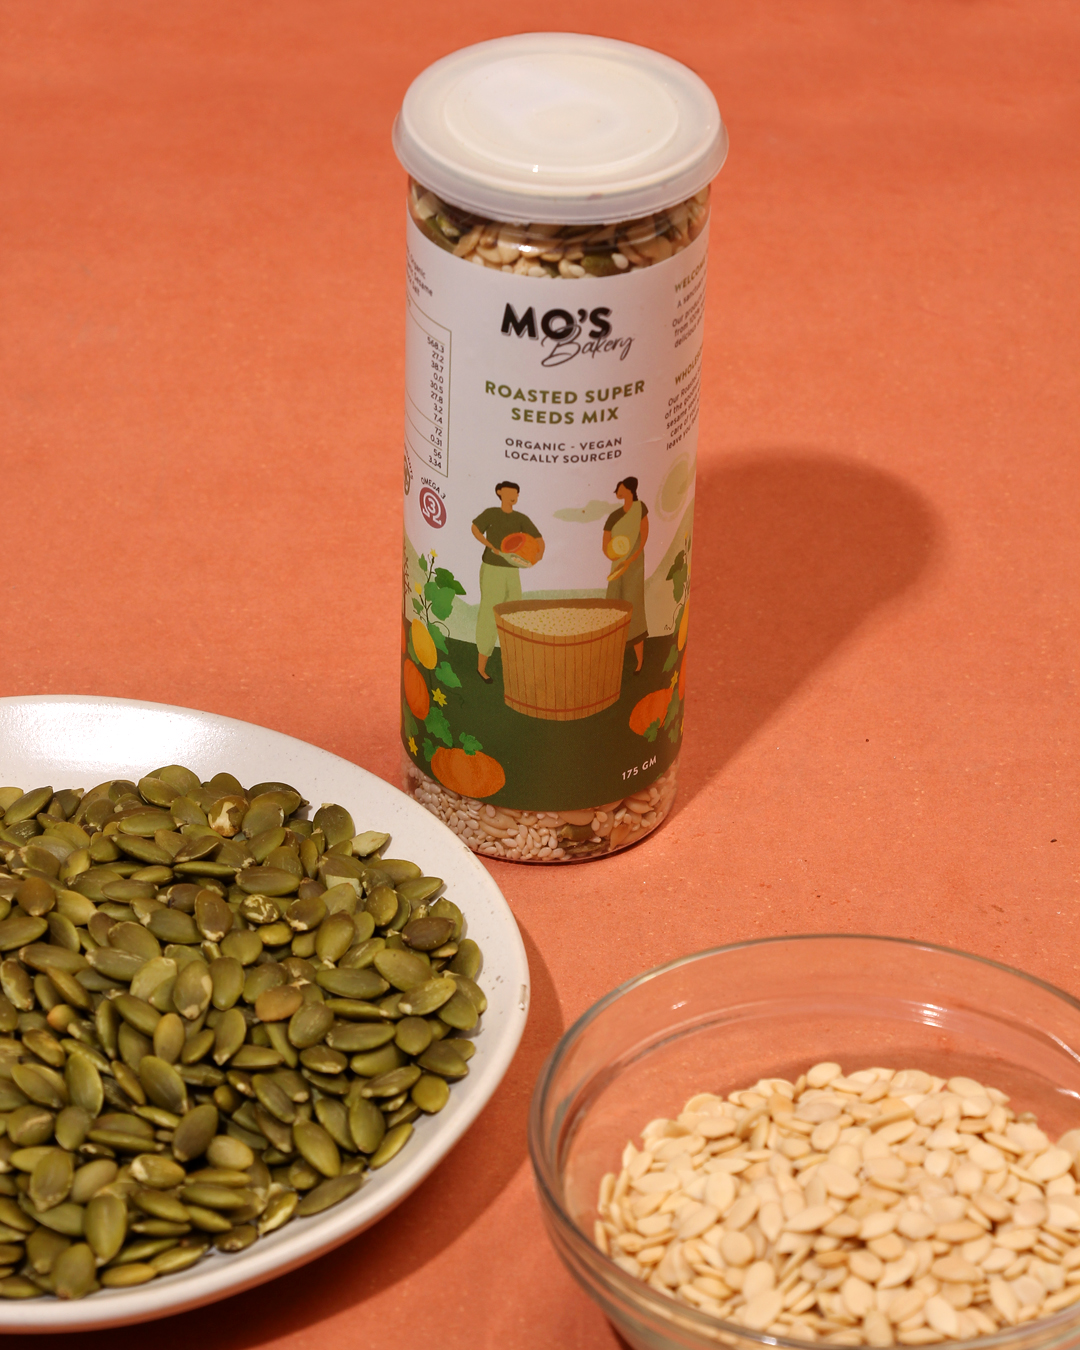 Product: Mo’s Bakery Roasted Super Seeds Mix